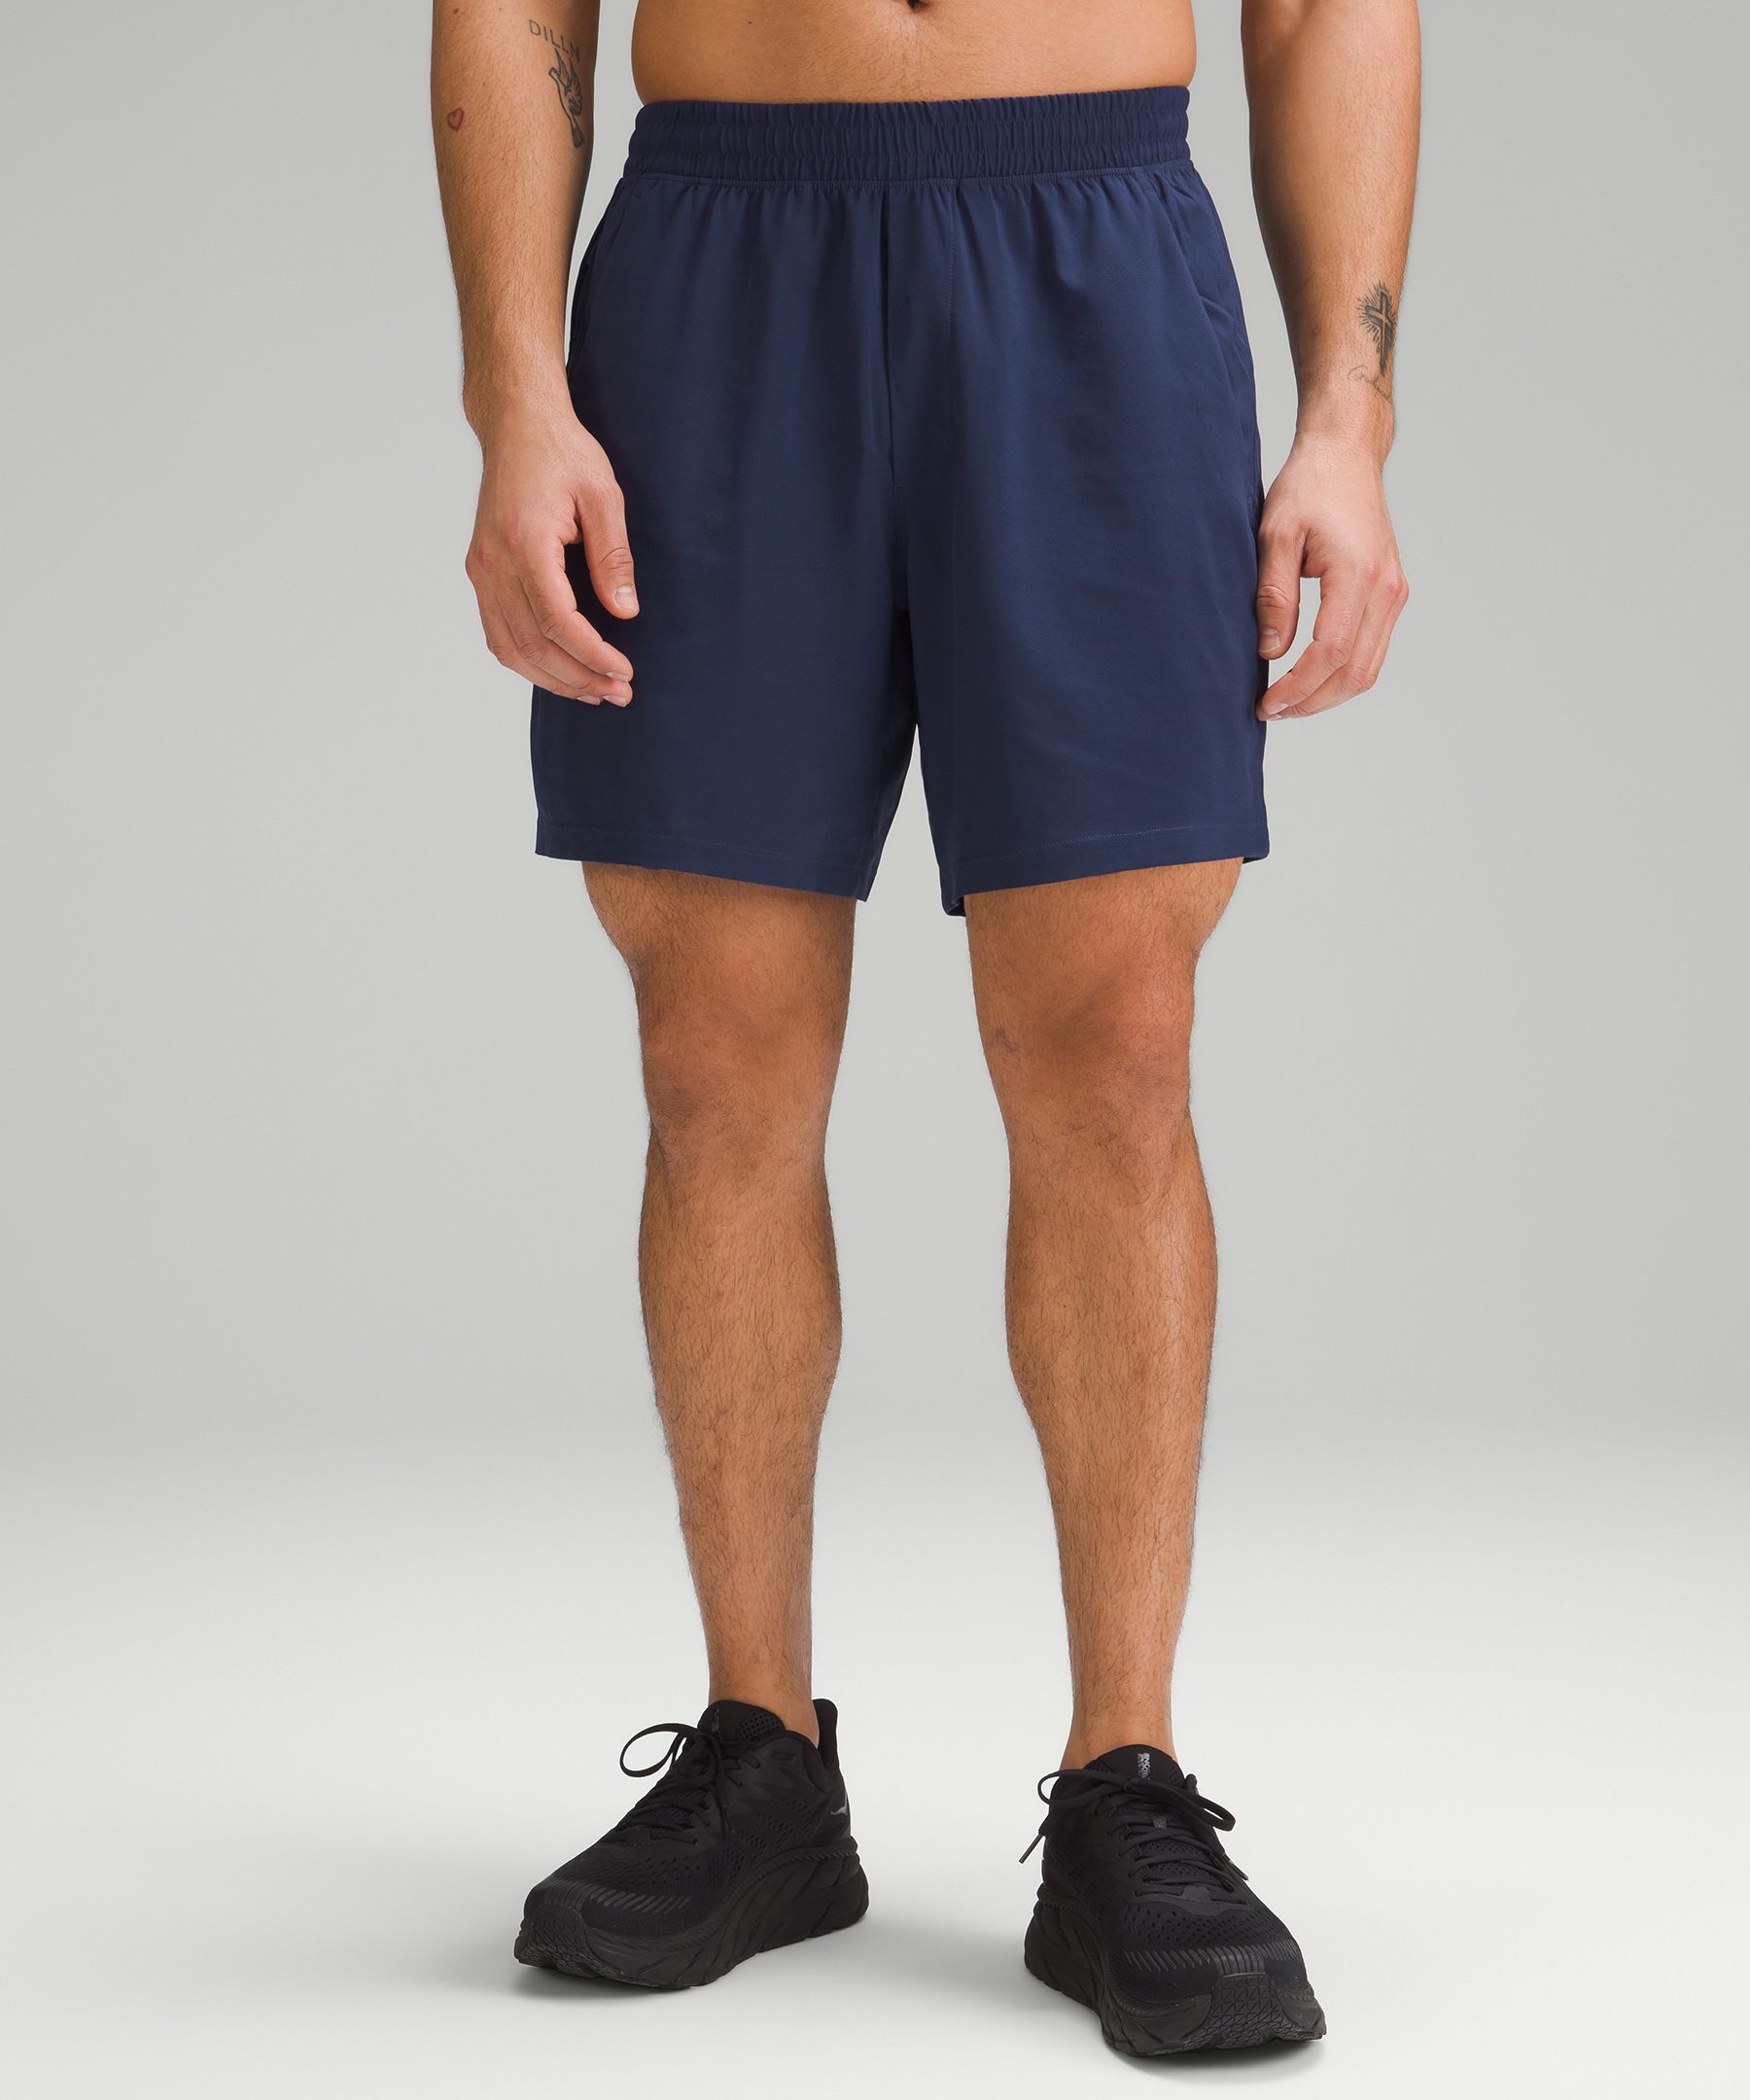 Affordable Alternative: Lululemon-Inspired Shorts